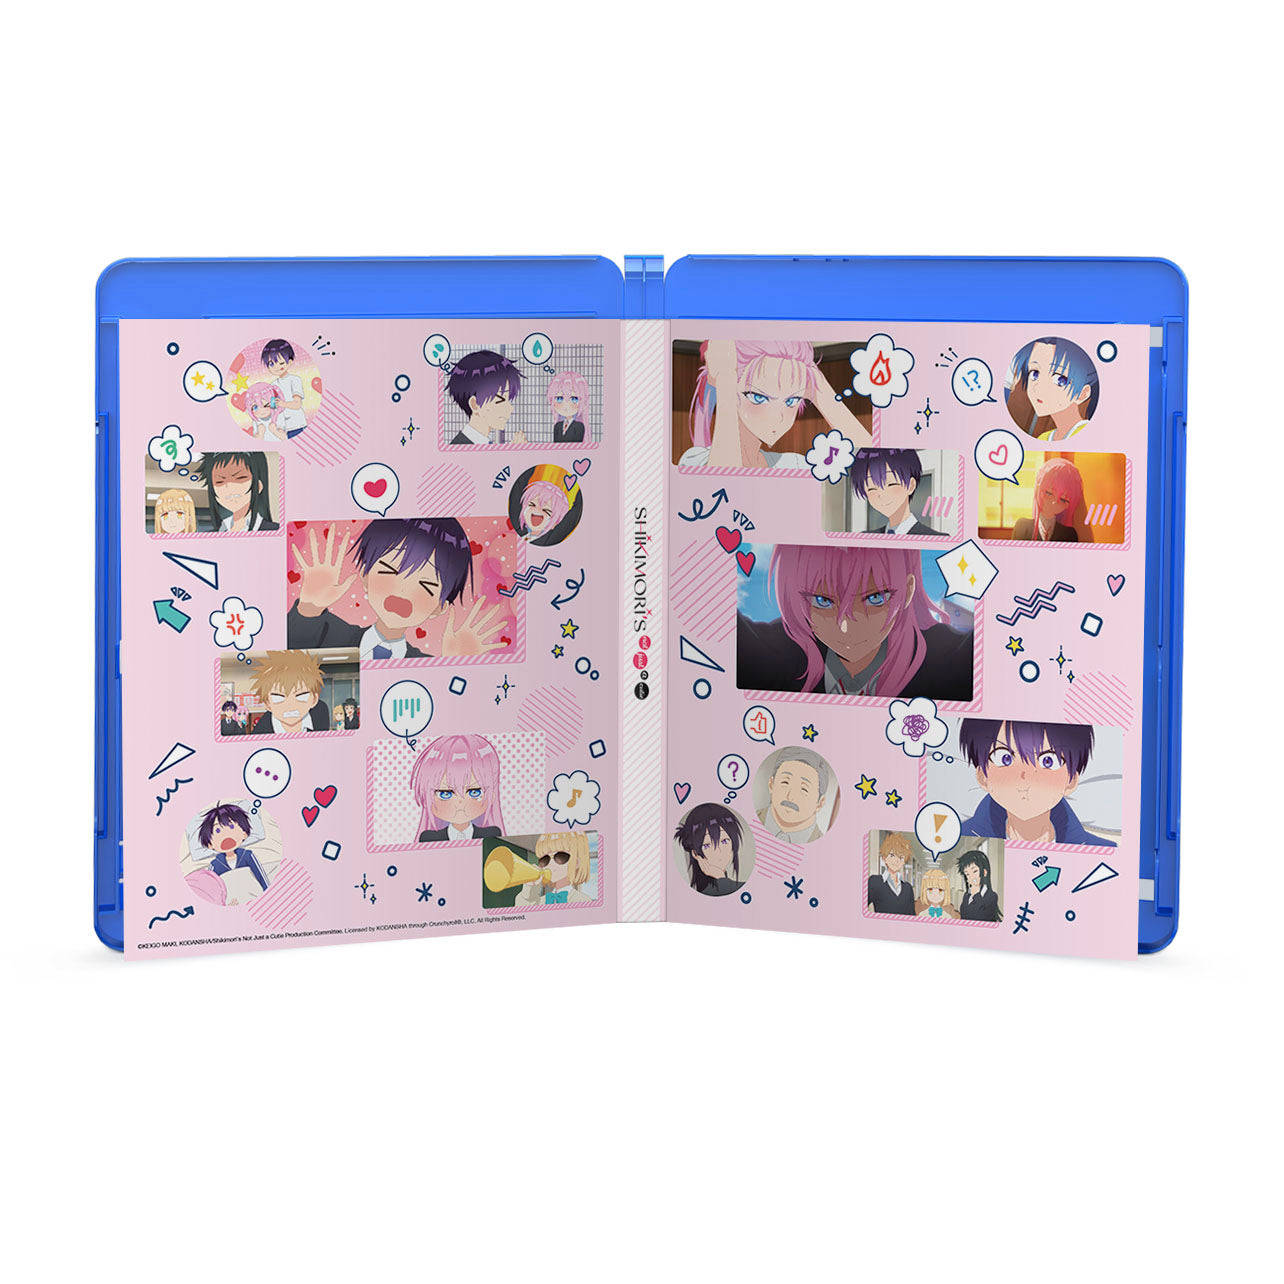 Shikimori's Not Just a Cutie - The Complete Season - Blu-Ray image count 4